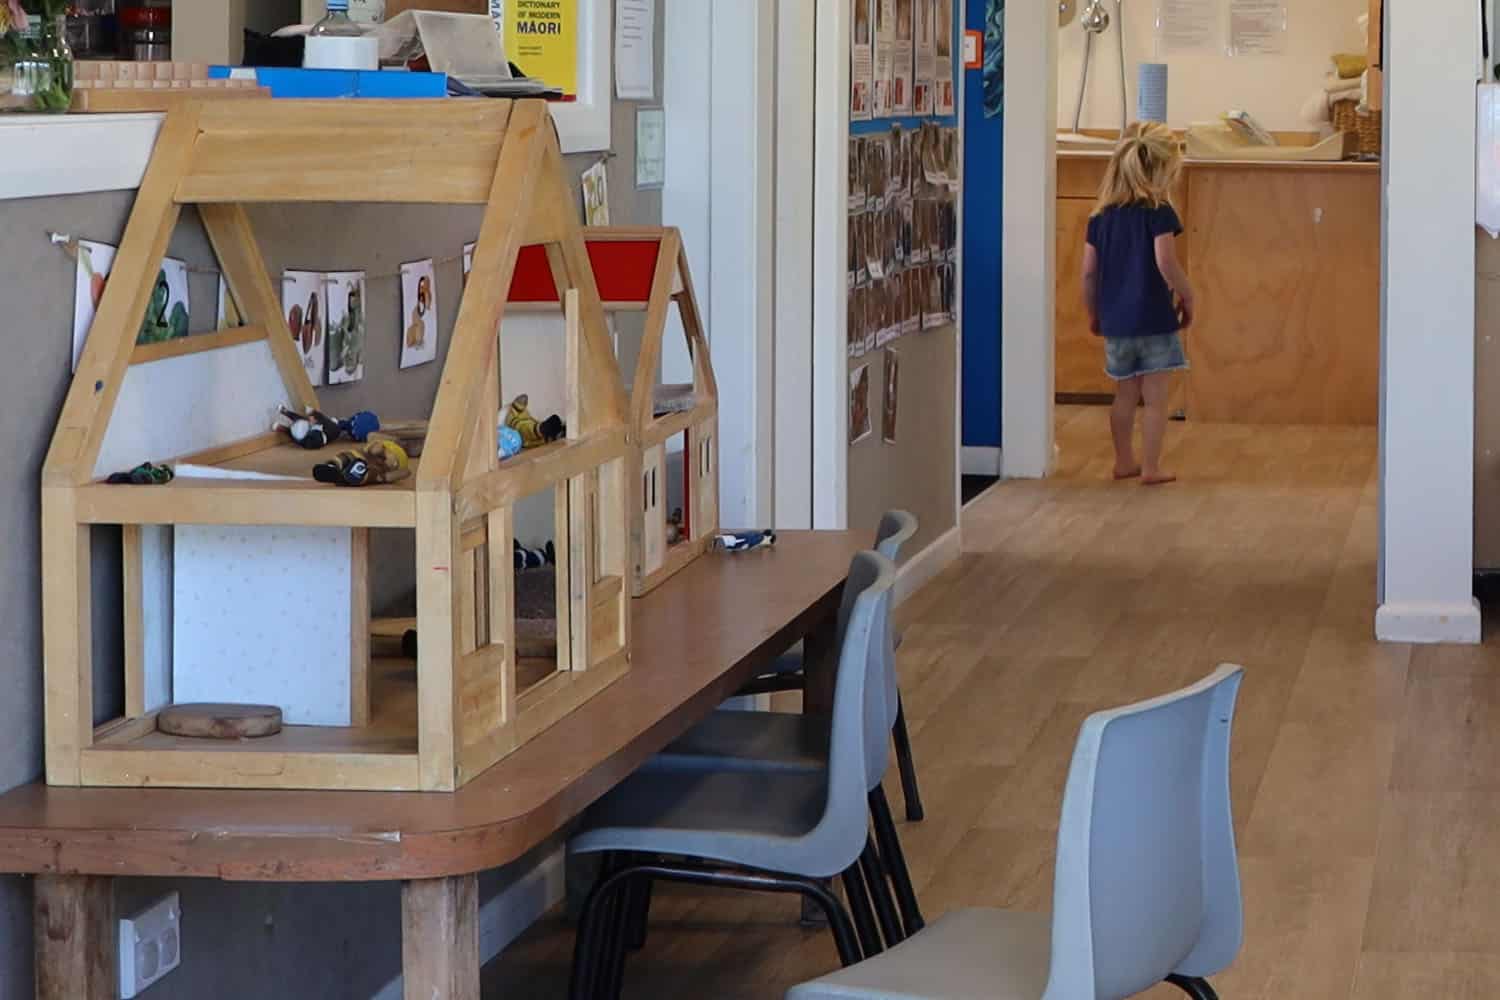 View of inside a preschool playroom, NZ.